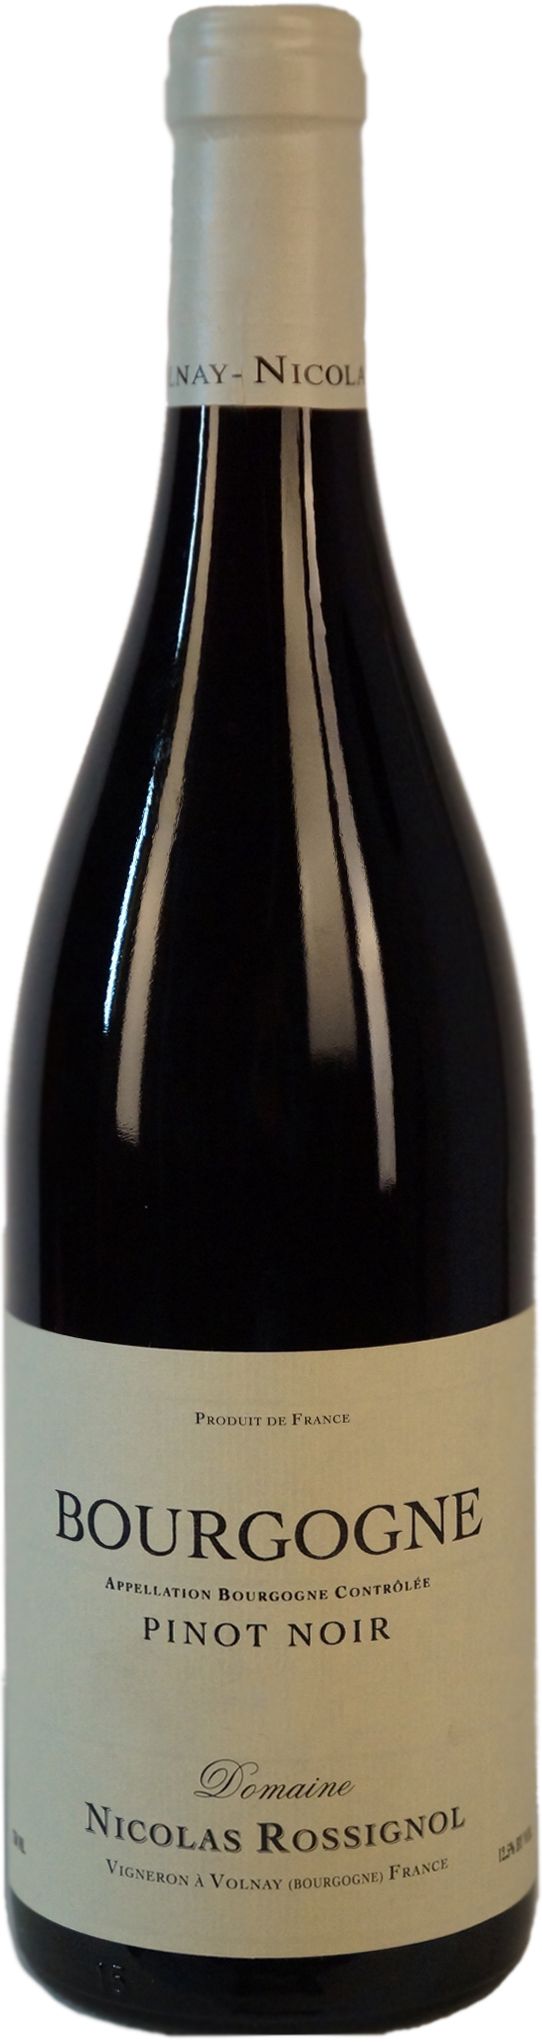 Domaine Nicolas Rossignol, Bourgogne Pinot Noir, 2013